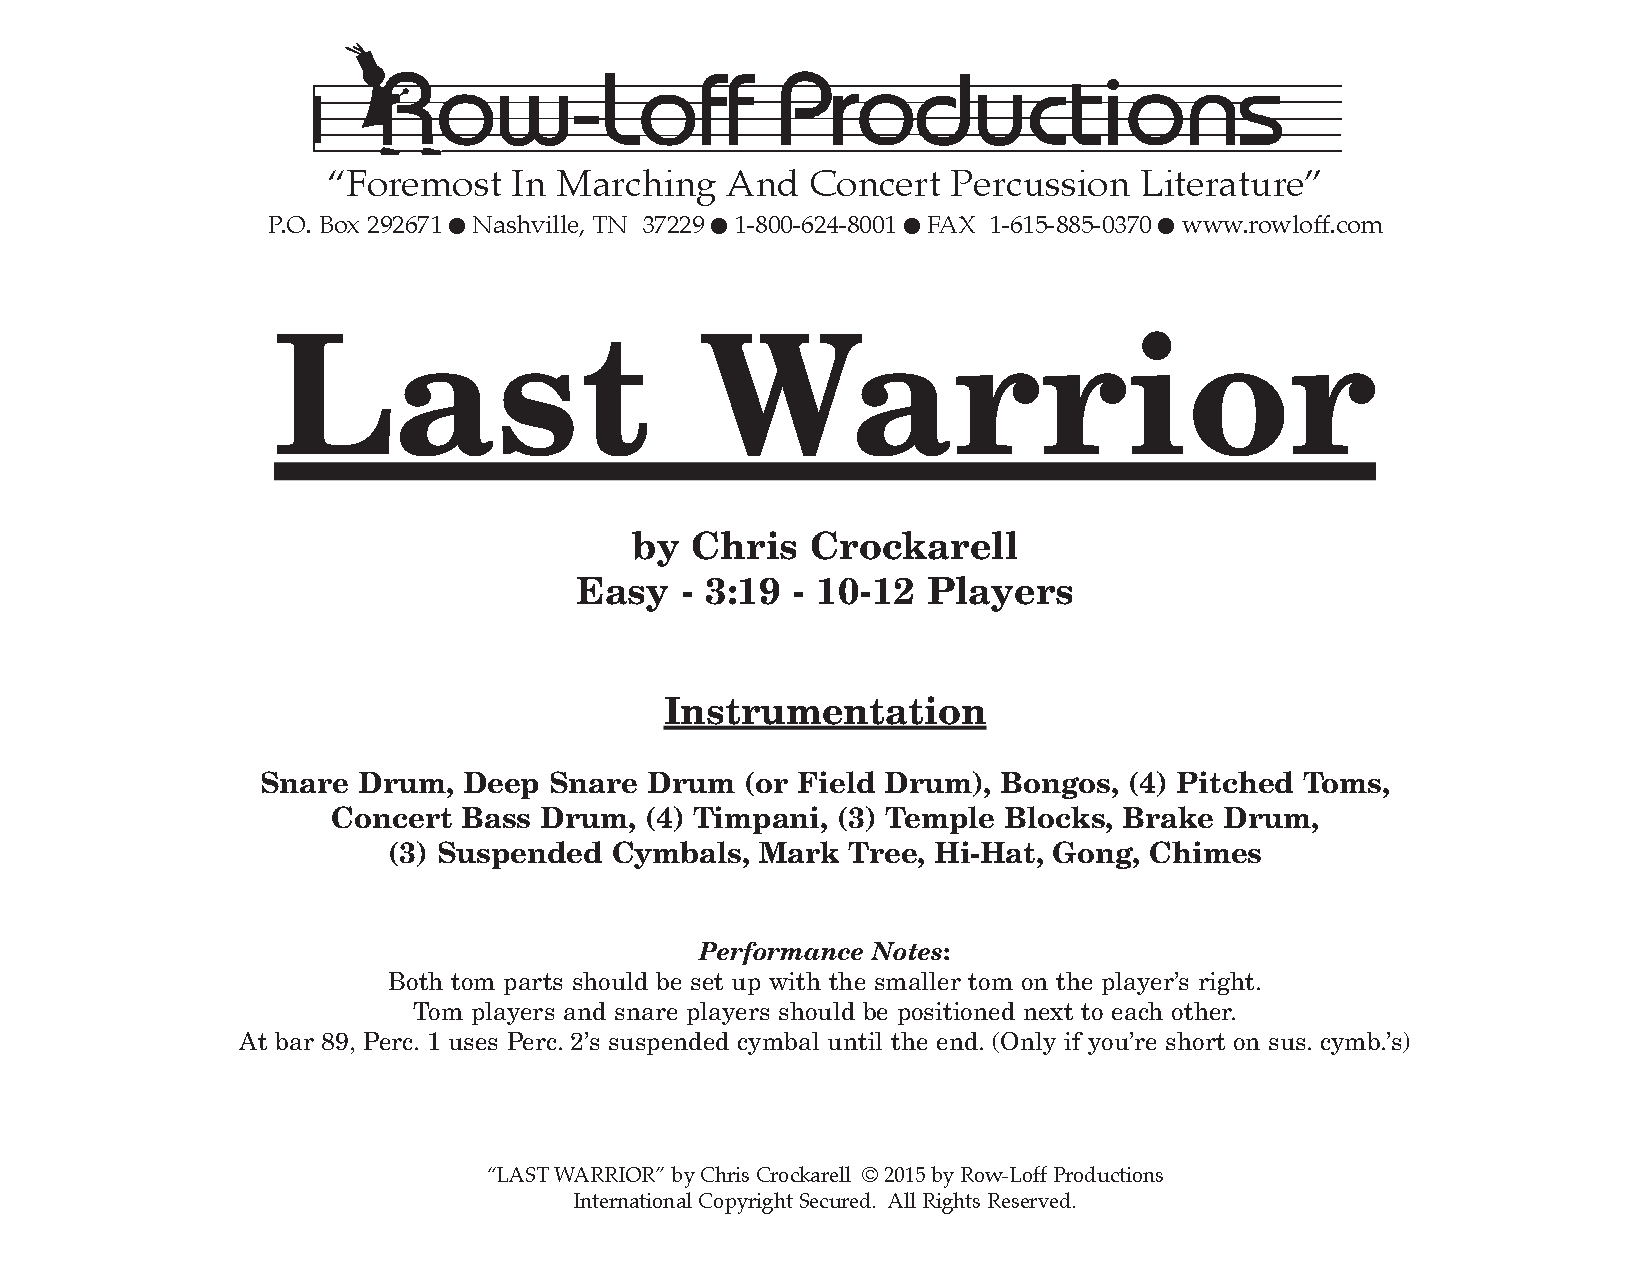 Last Warrior Percussion Ensemble - 10-12 players